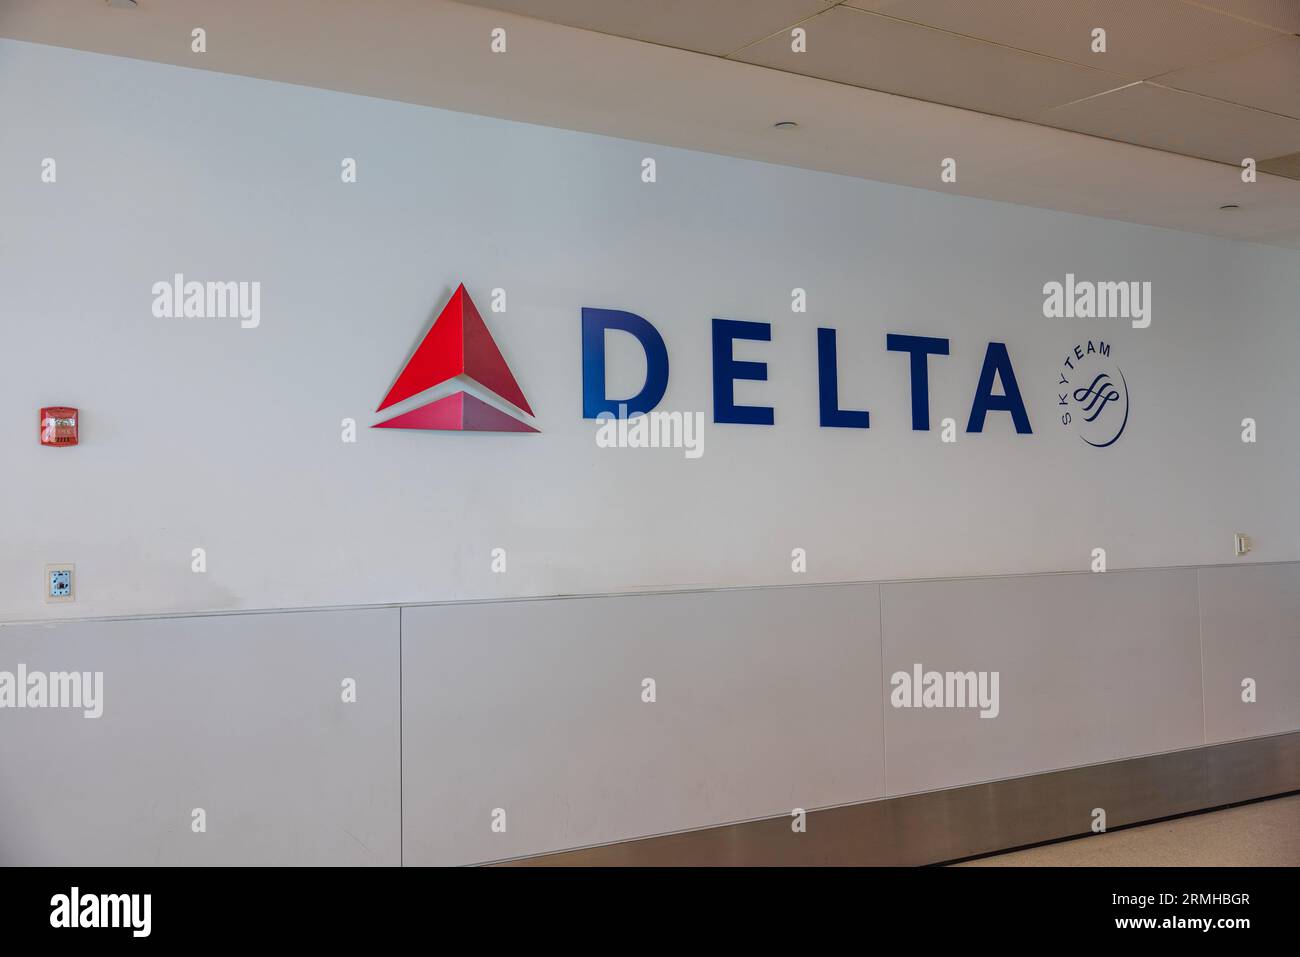 Close-up view of Delta logo on white wall background. USA. NY. Stock Photo